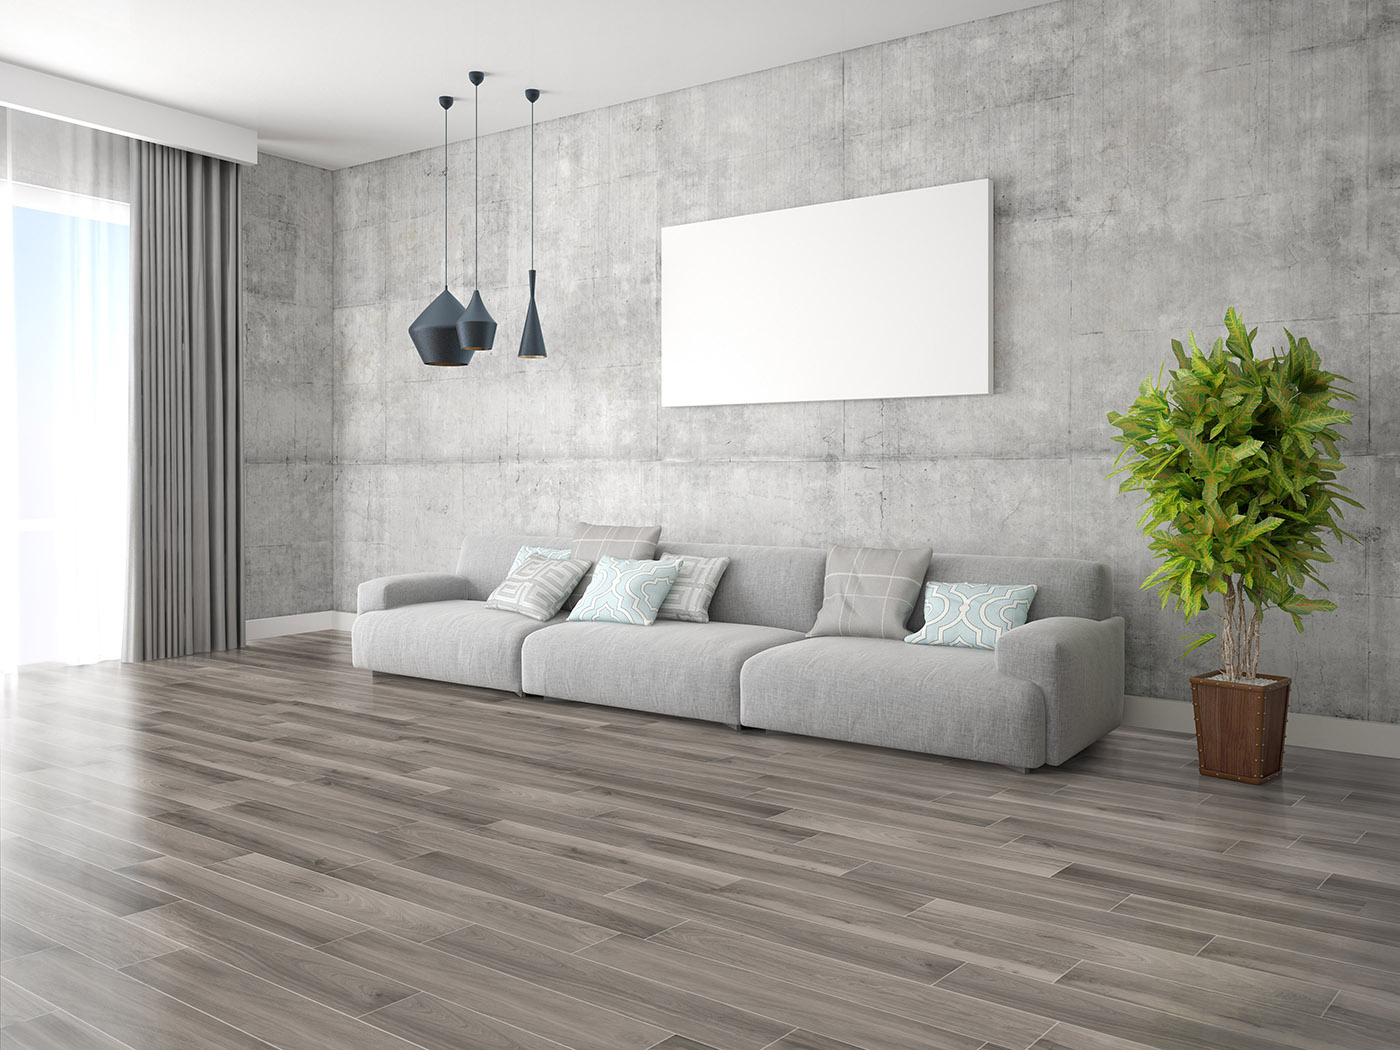  Spazio LA Tile Gallery   Luxury tiles    wood flooring    countertops  